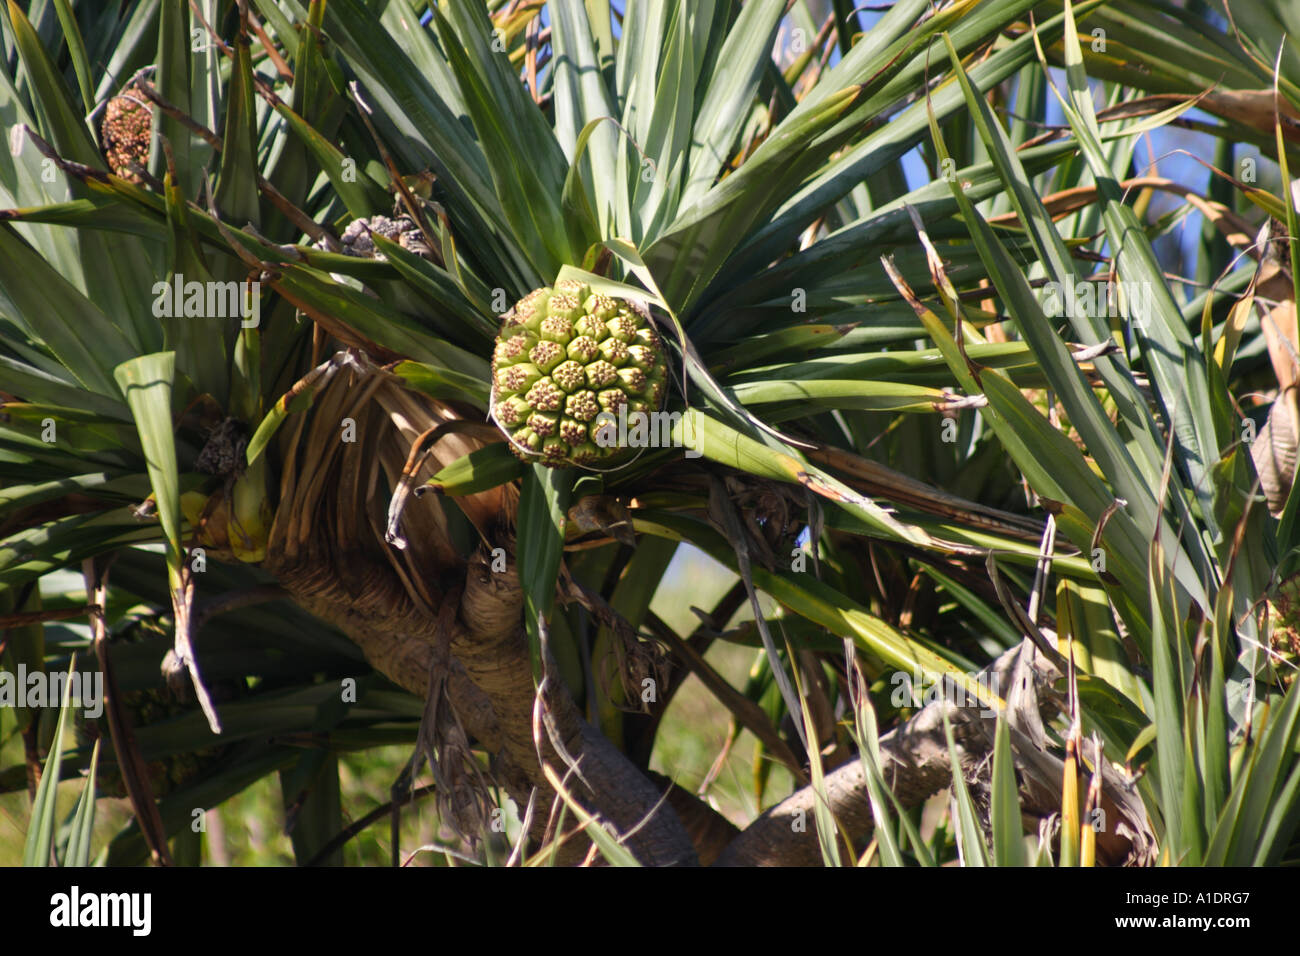 RIPE FRUIT ON A PANDANUS PALM TREE Stock Photo - Alamy